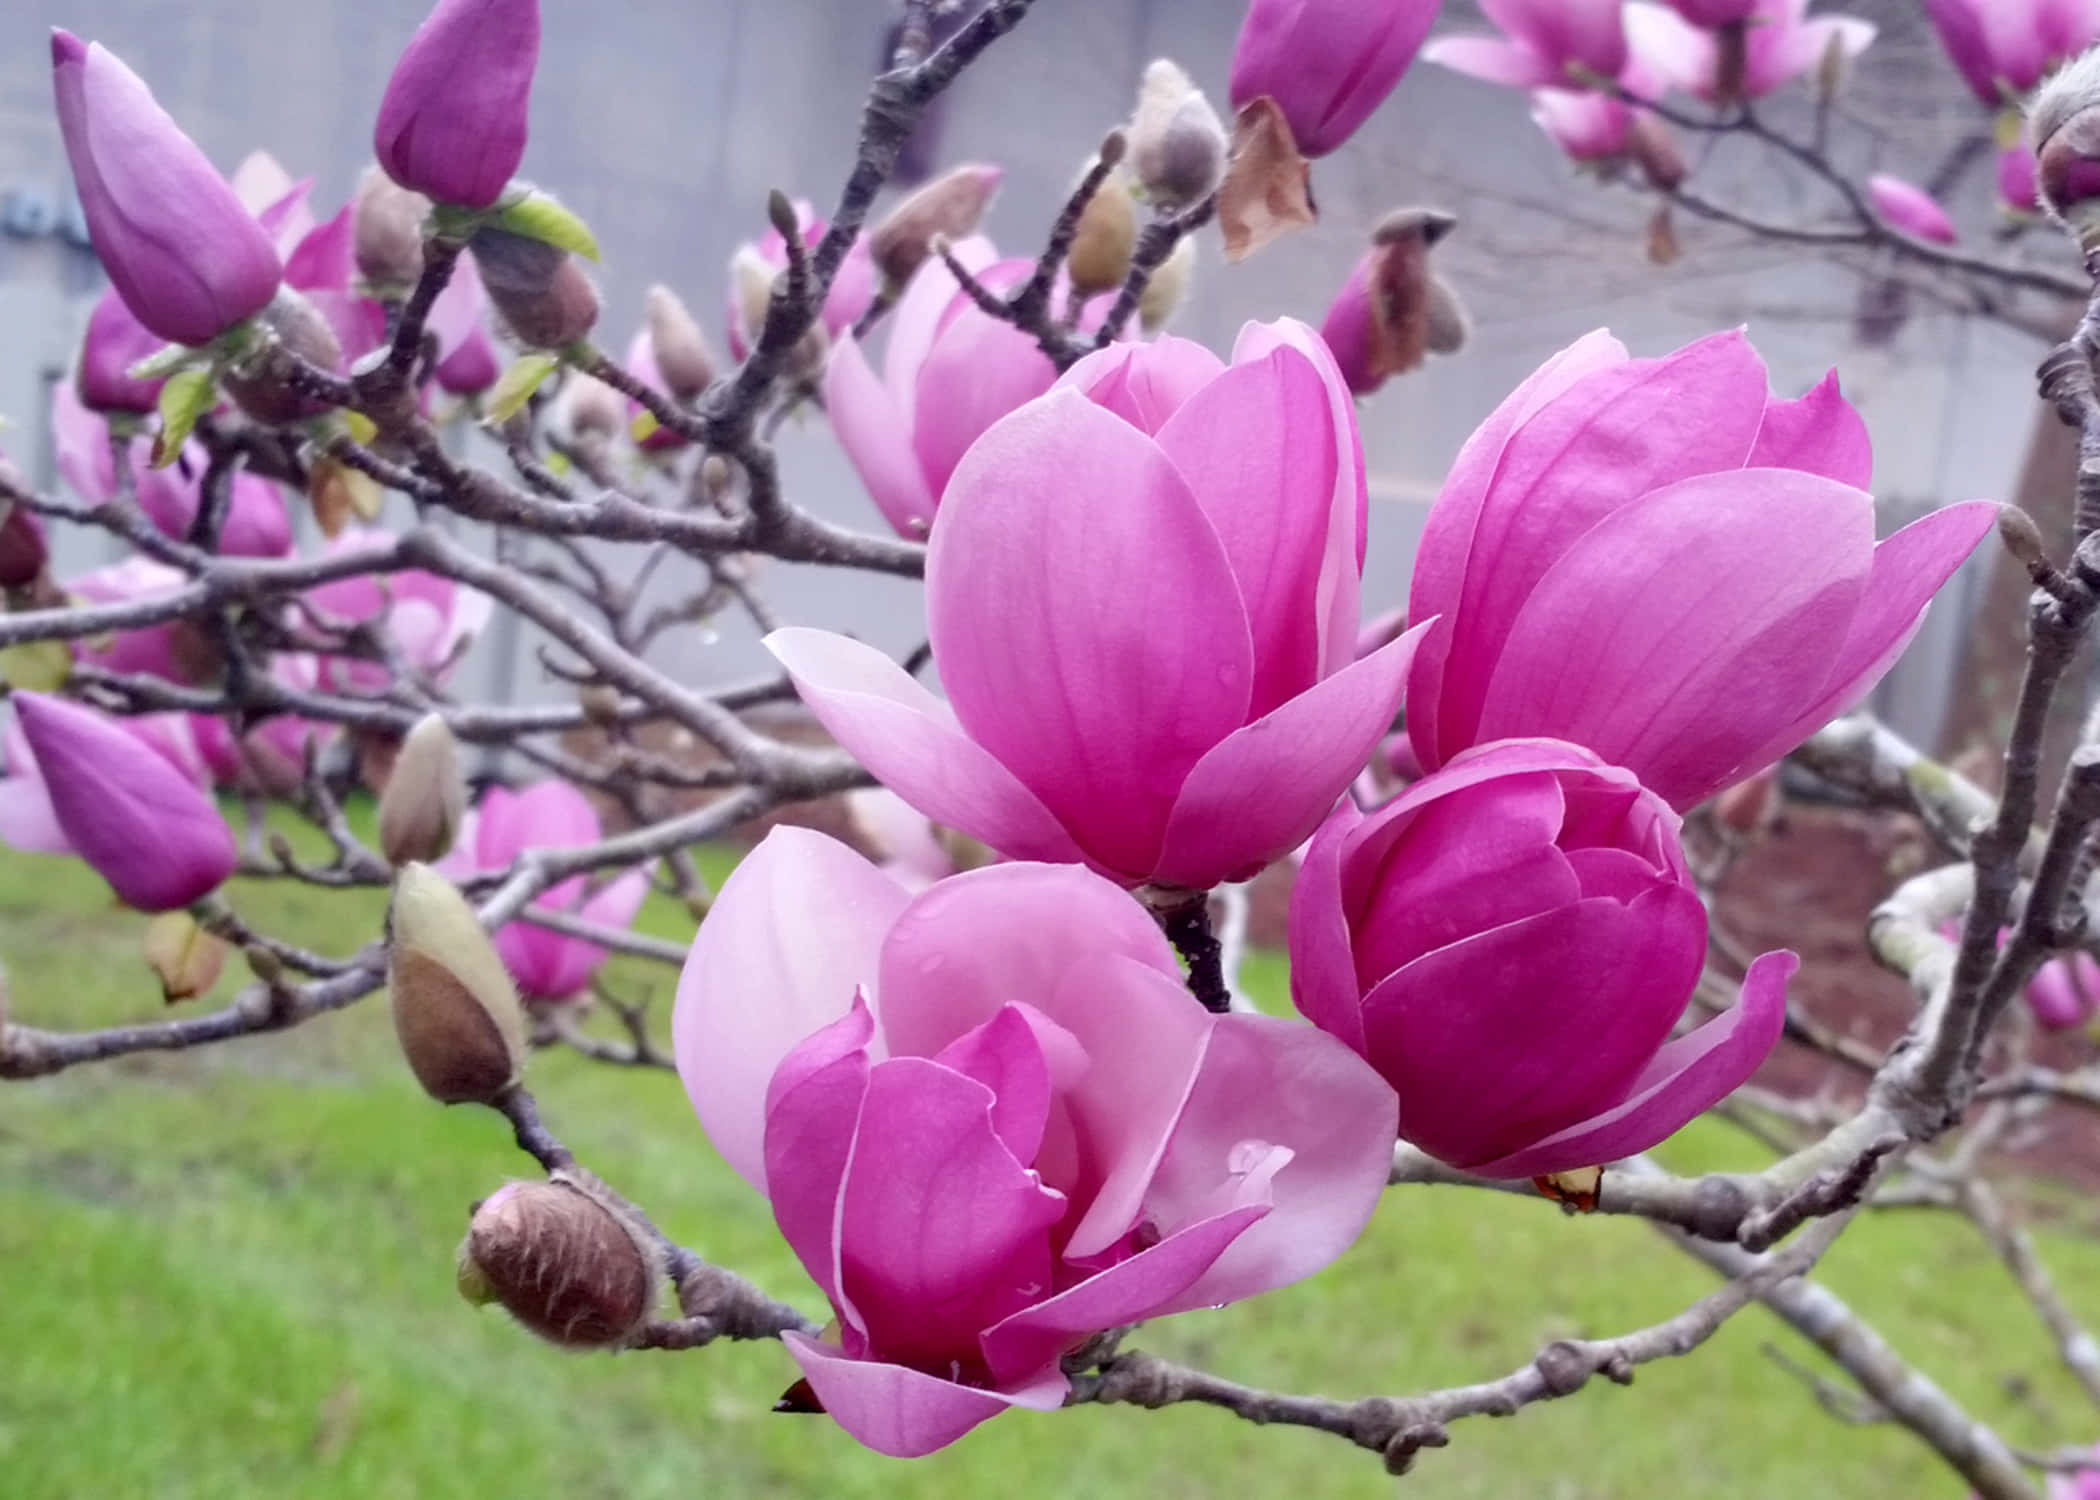 Magnolia Blossoms in Bloom